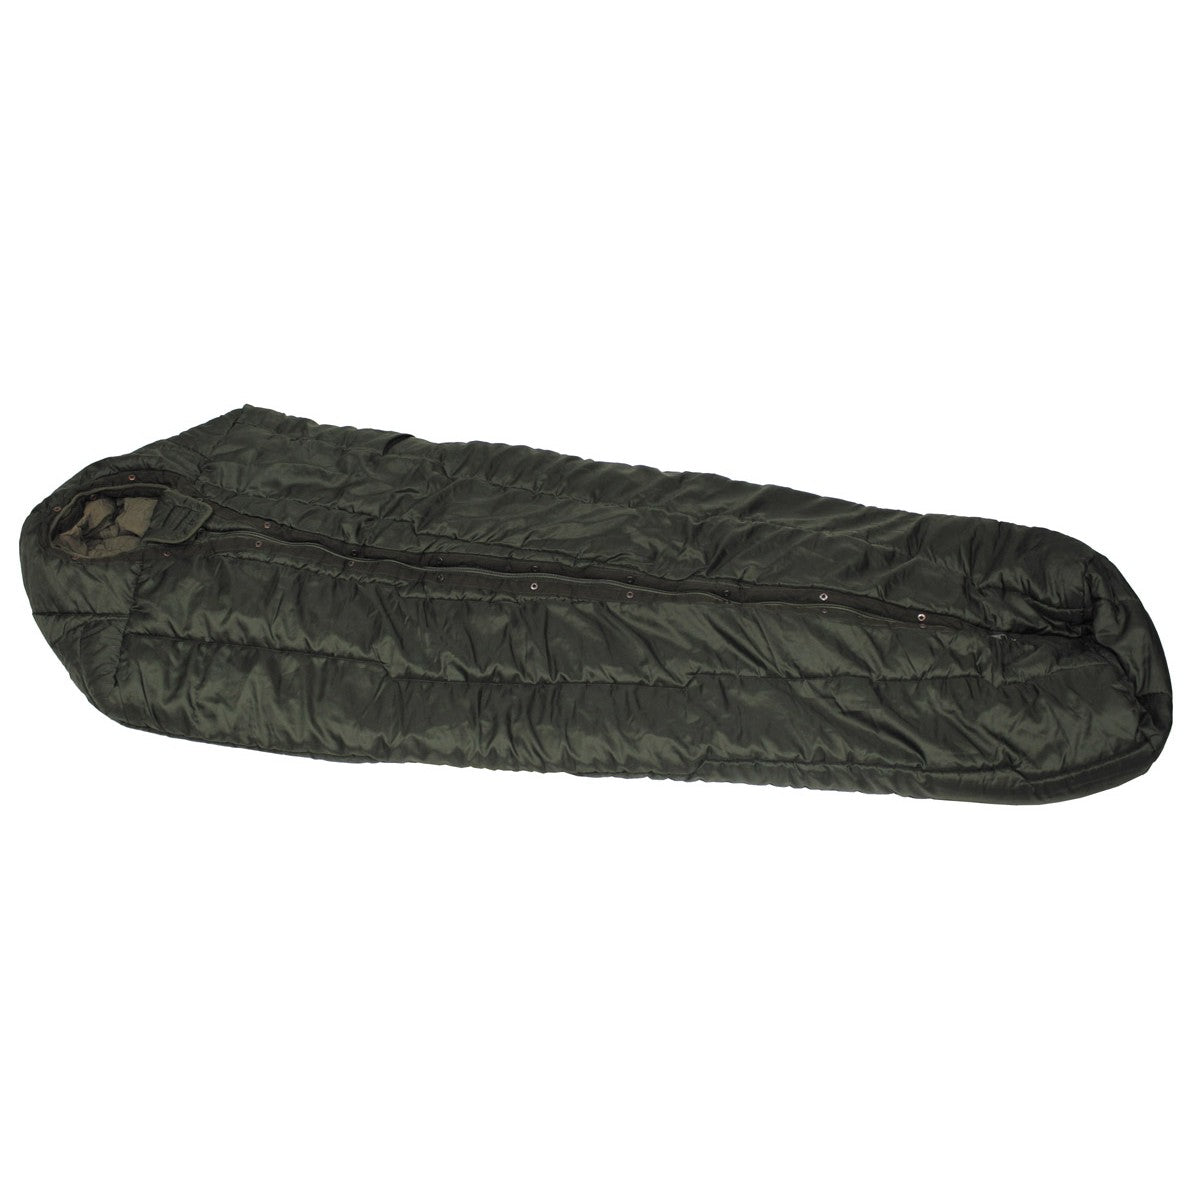 dutch-m90-sleeping-bag-militarymart_1600x.jpg